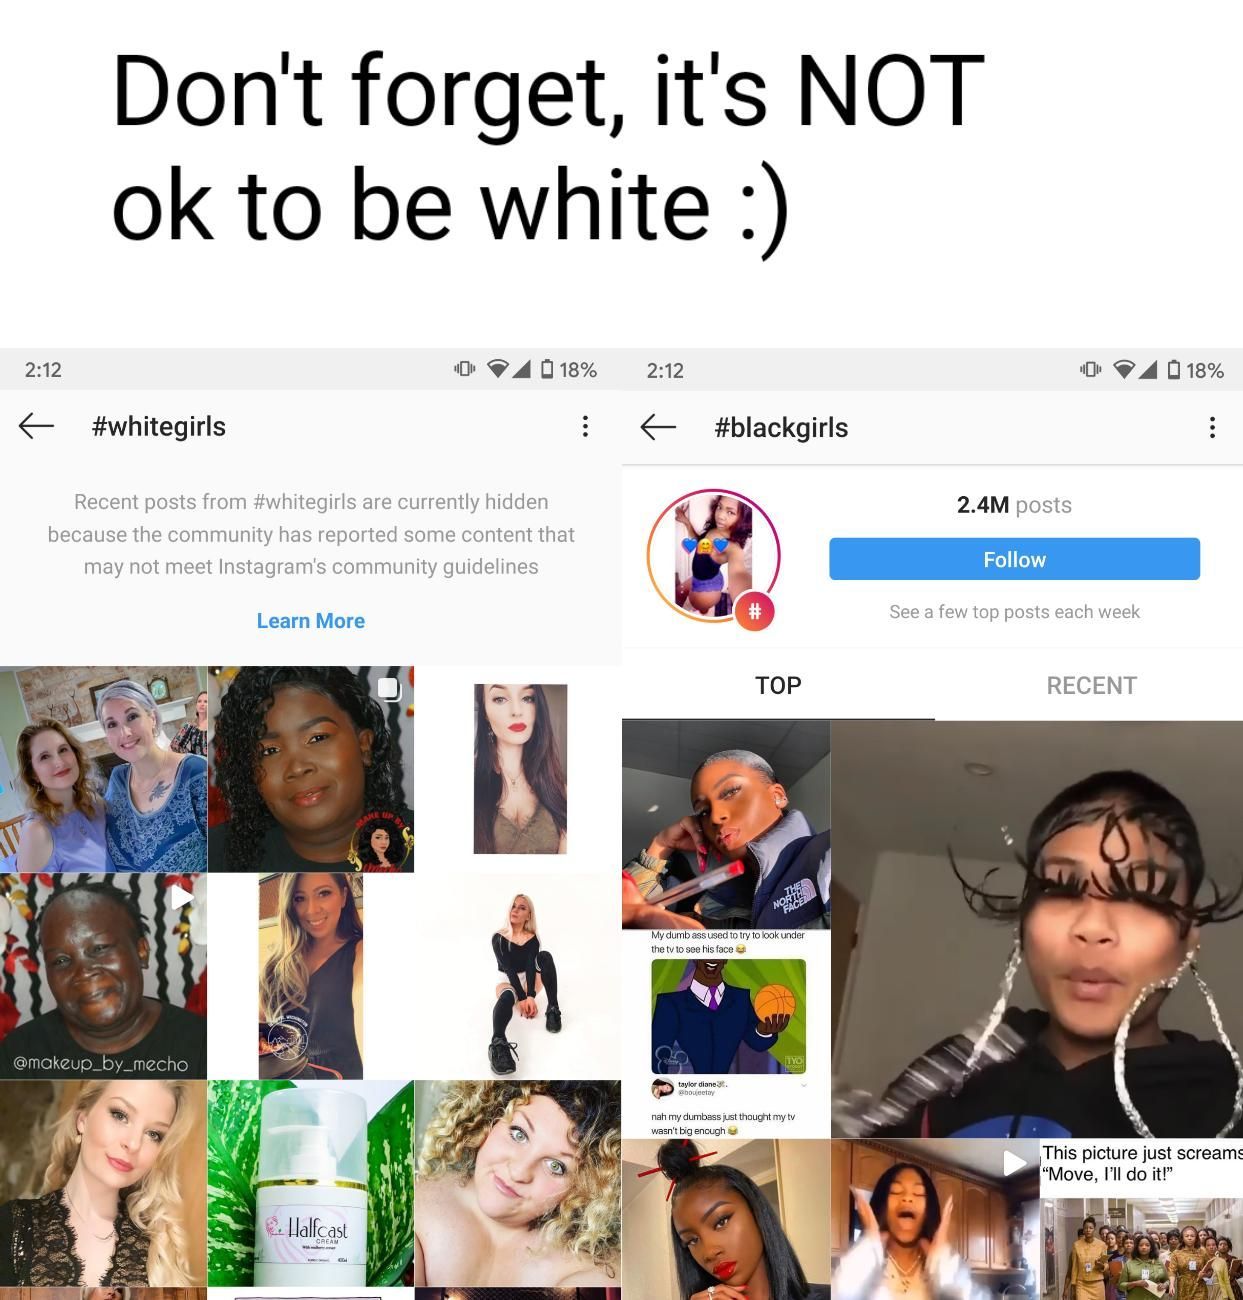 White people bad